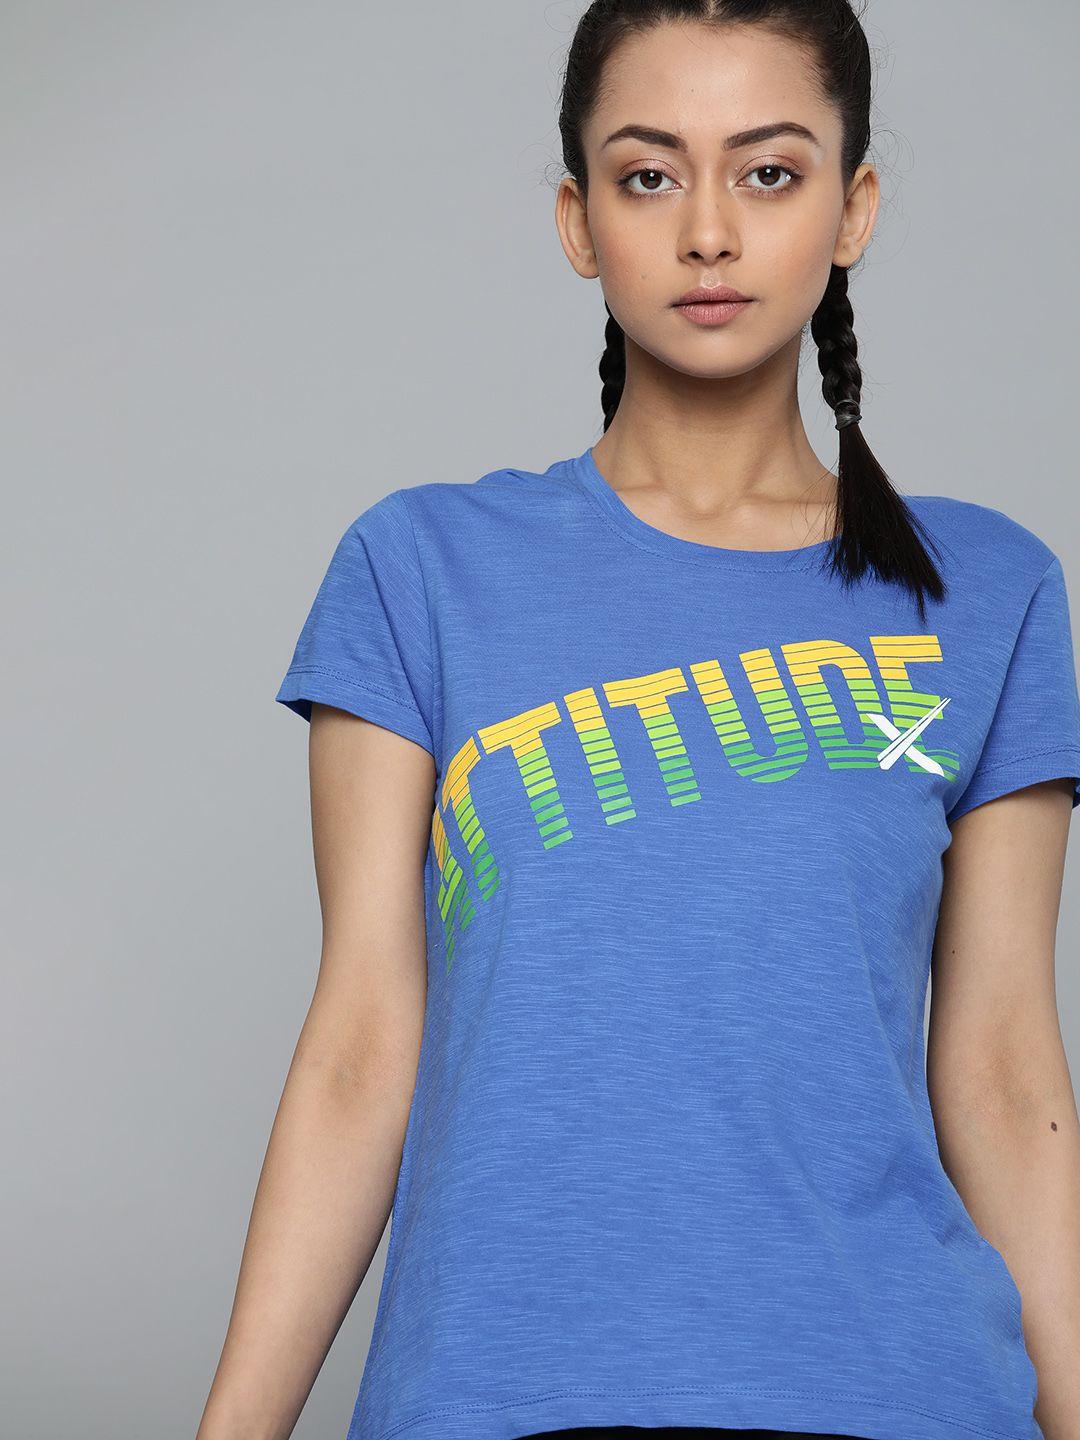 hrx by hrithik roshan women strong blue typographic bio-wash lifestyle pure cotton t-shirt